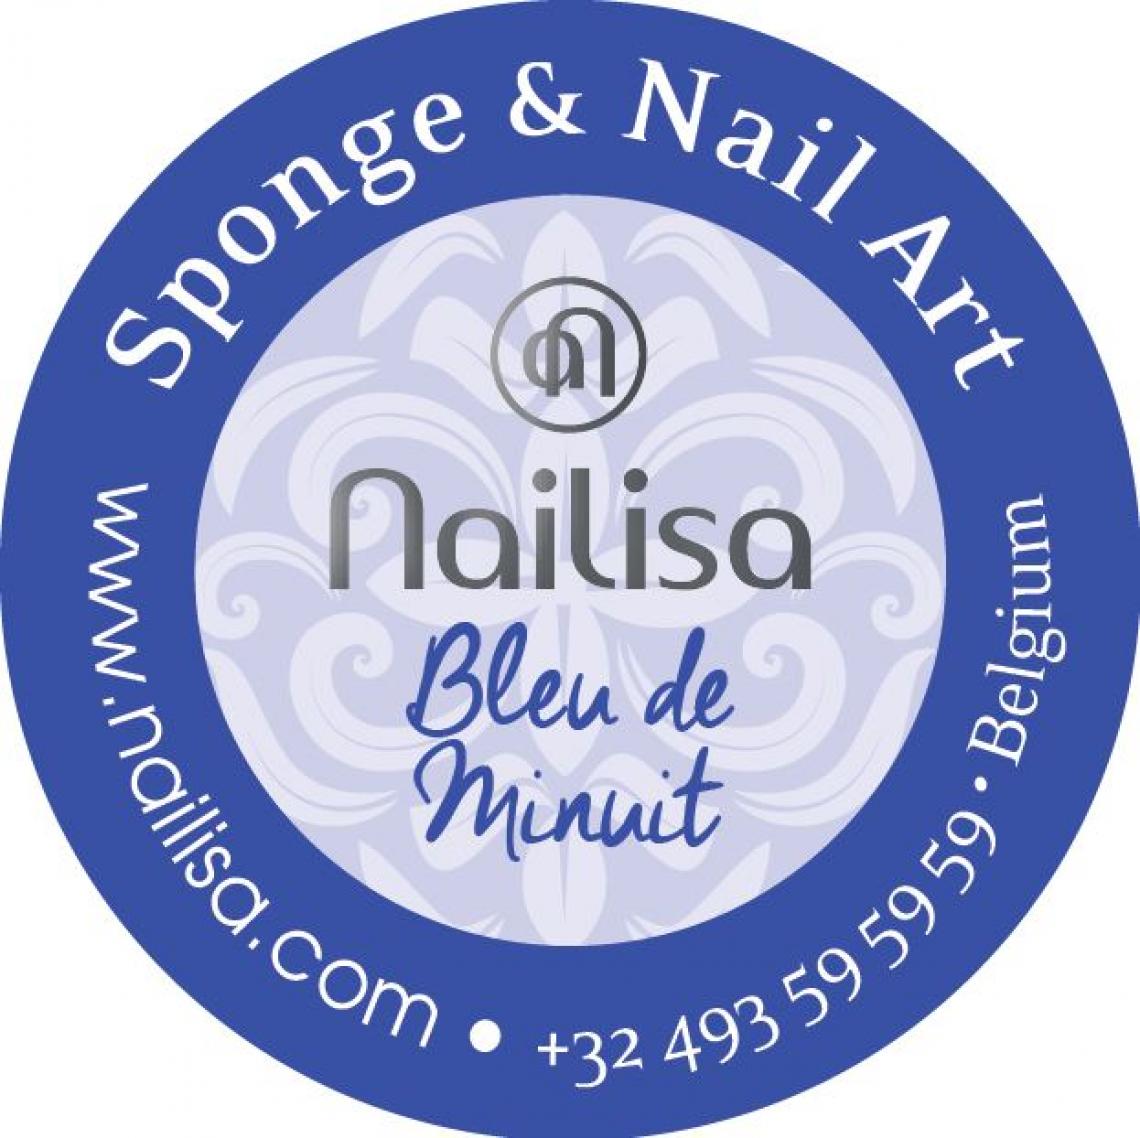 Painting Gel Sponge & Nail Art - Bleu de minuit 5ml - photo 8